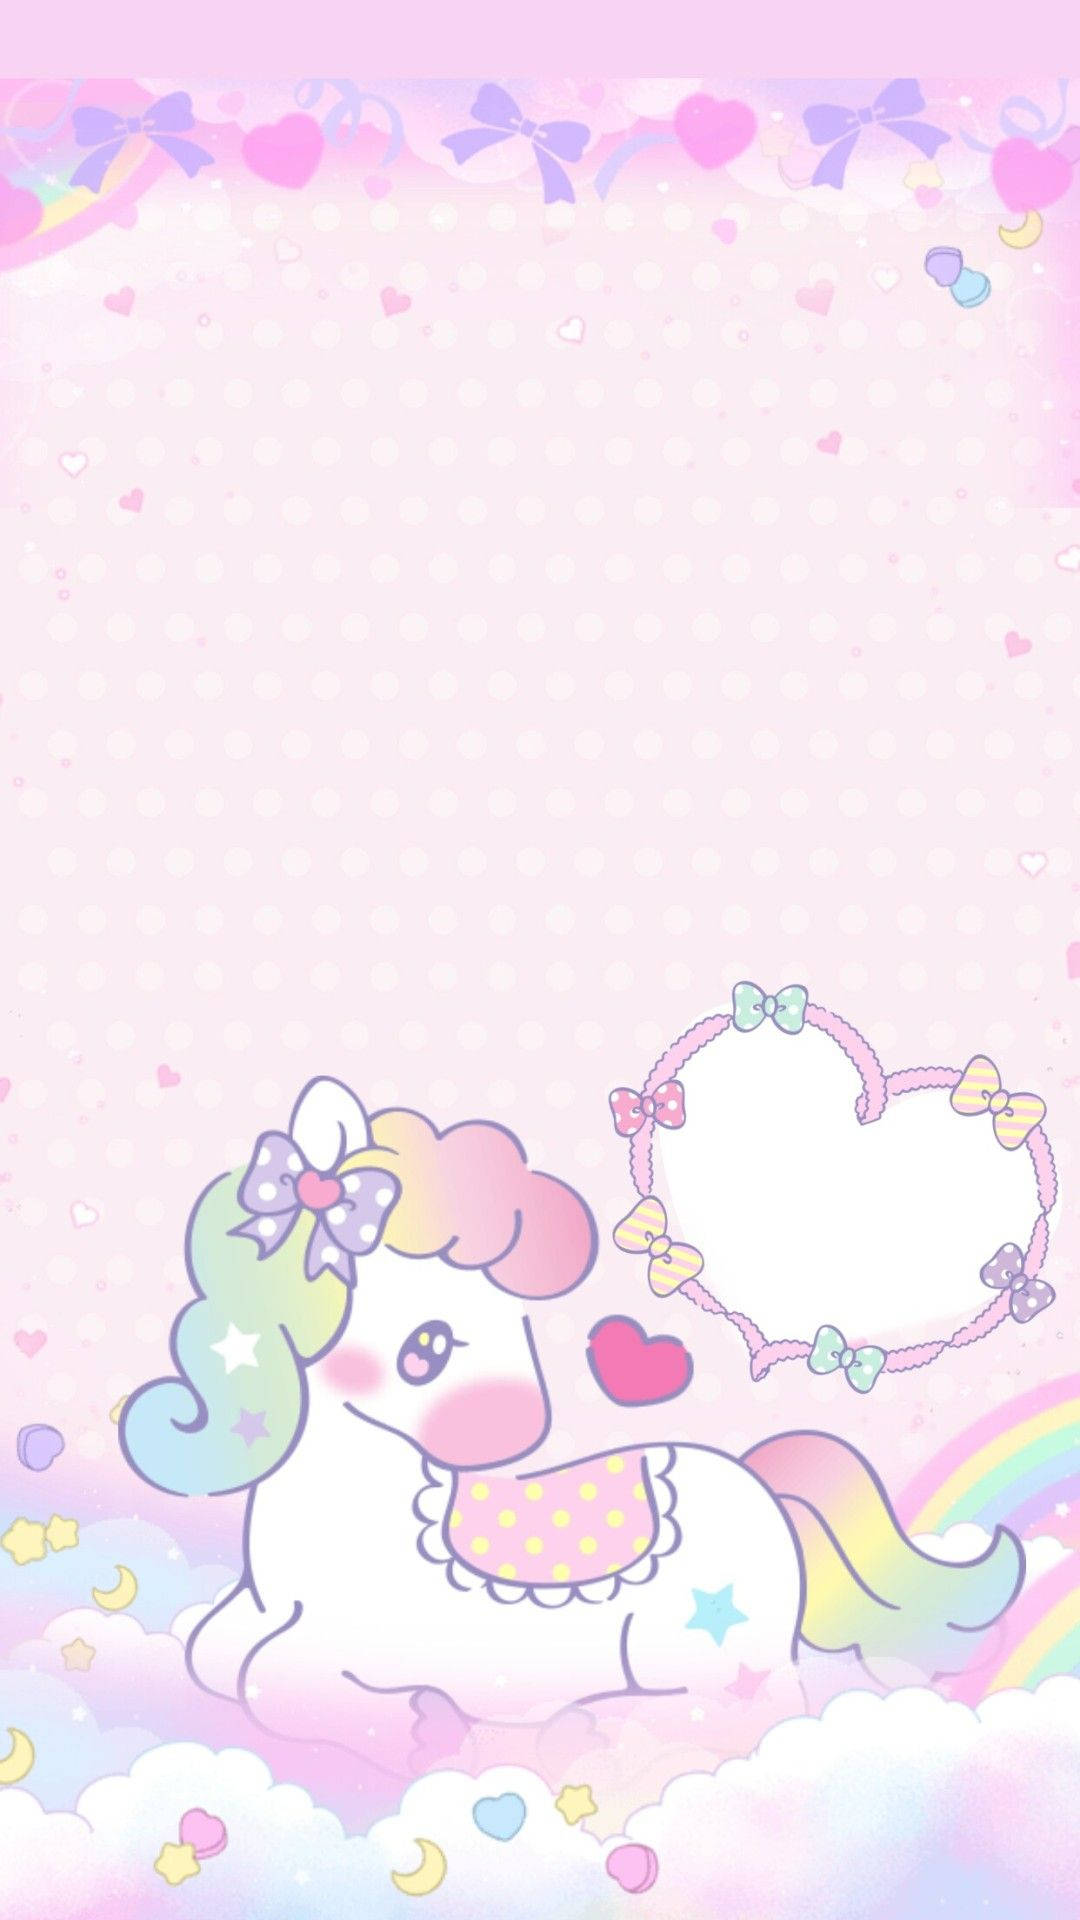 100+] Rainbow Unicorn Wallpapers